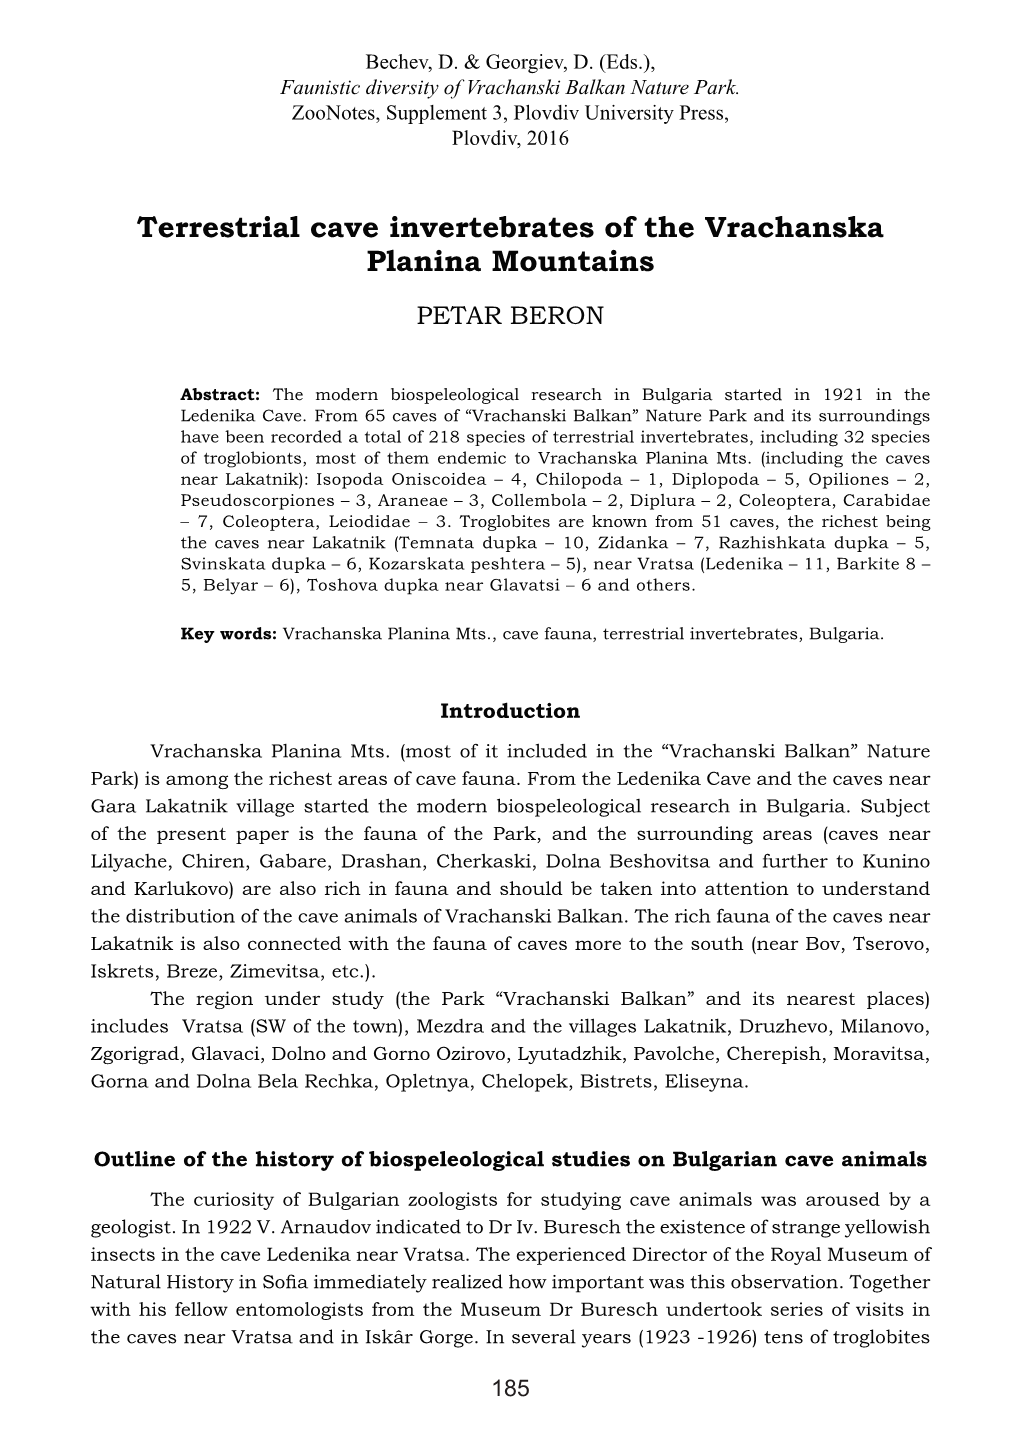 Terrestrial Cave Invertebrates of the Vrachanska Planina Mountains